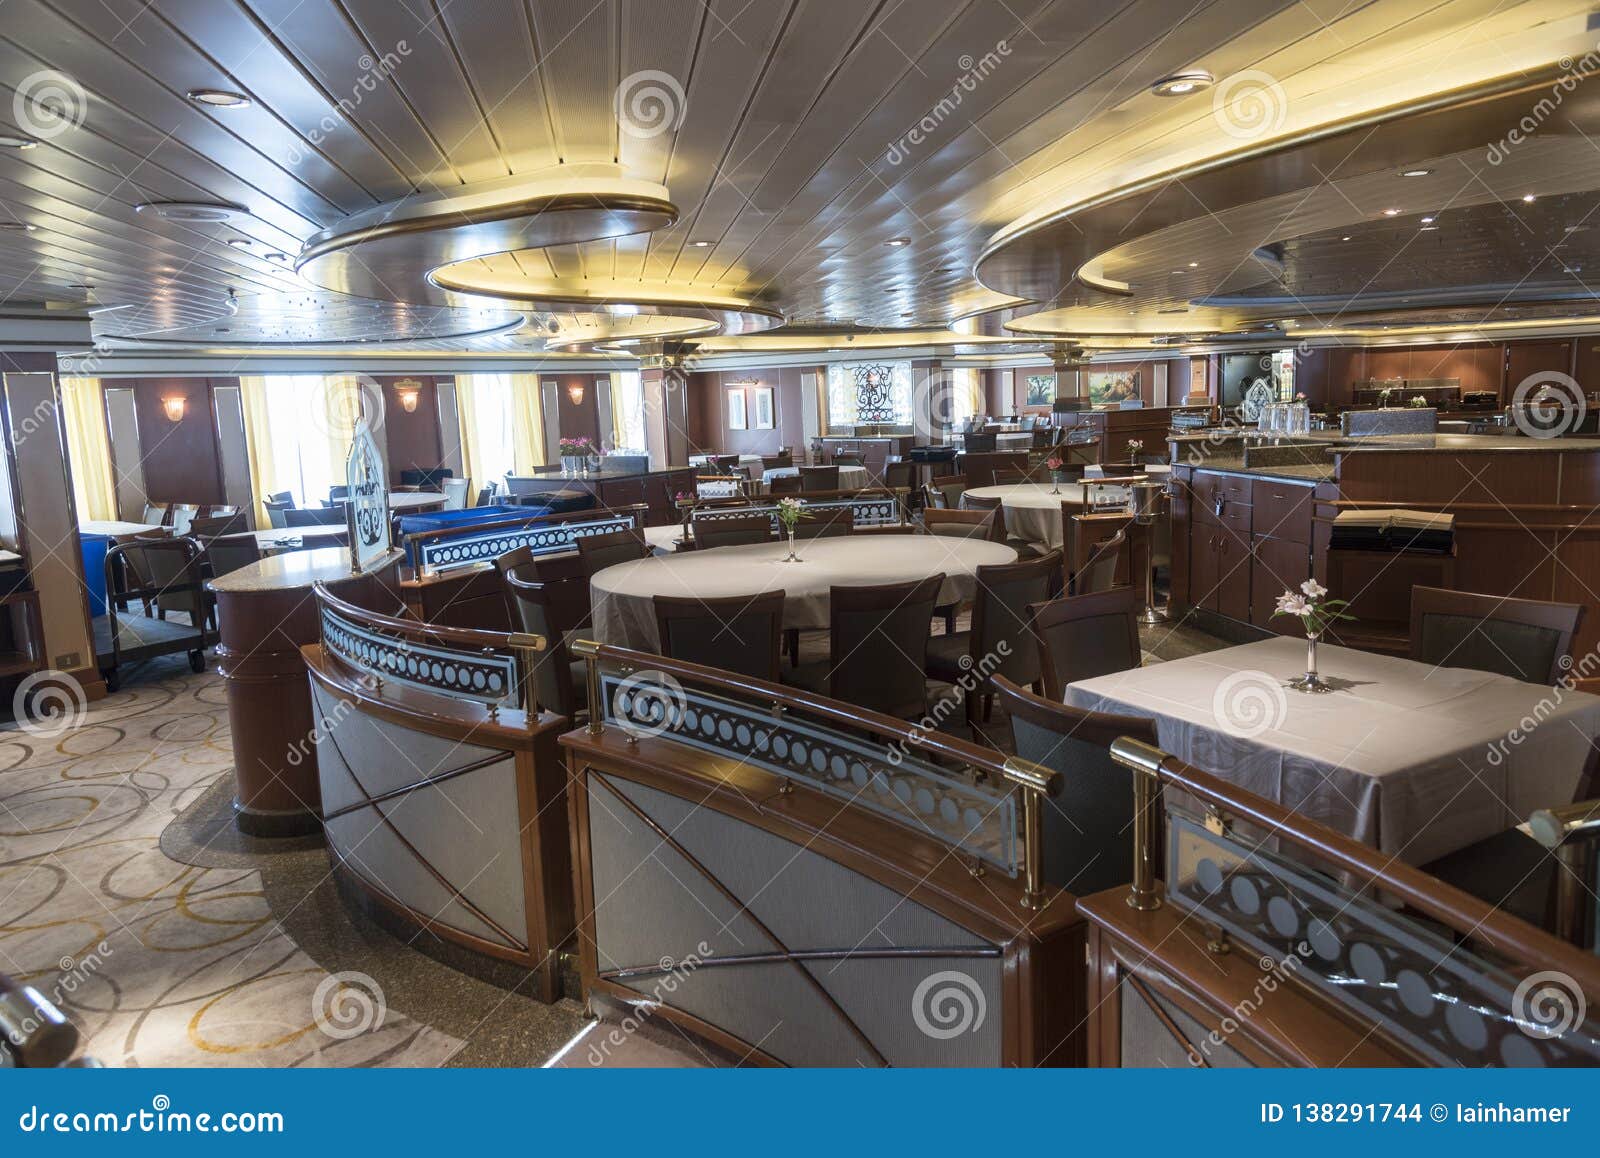 A Main Dining Room On Mv Island Princess Editorial Stock